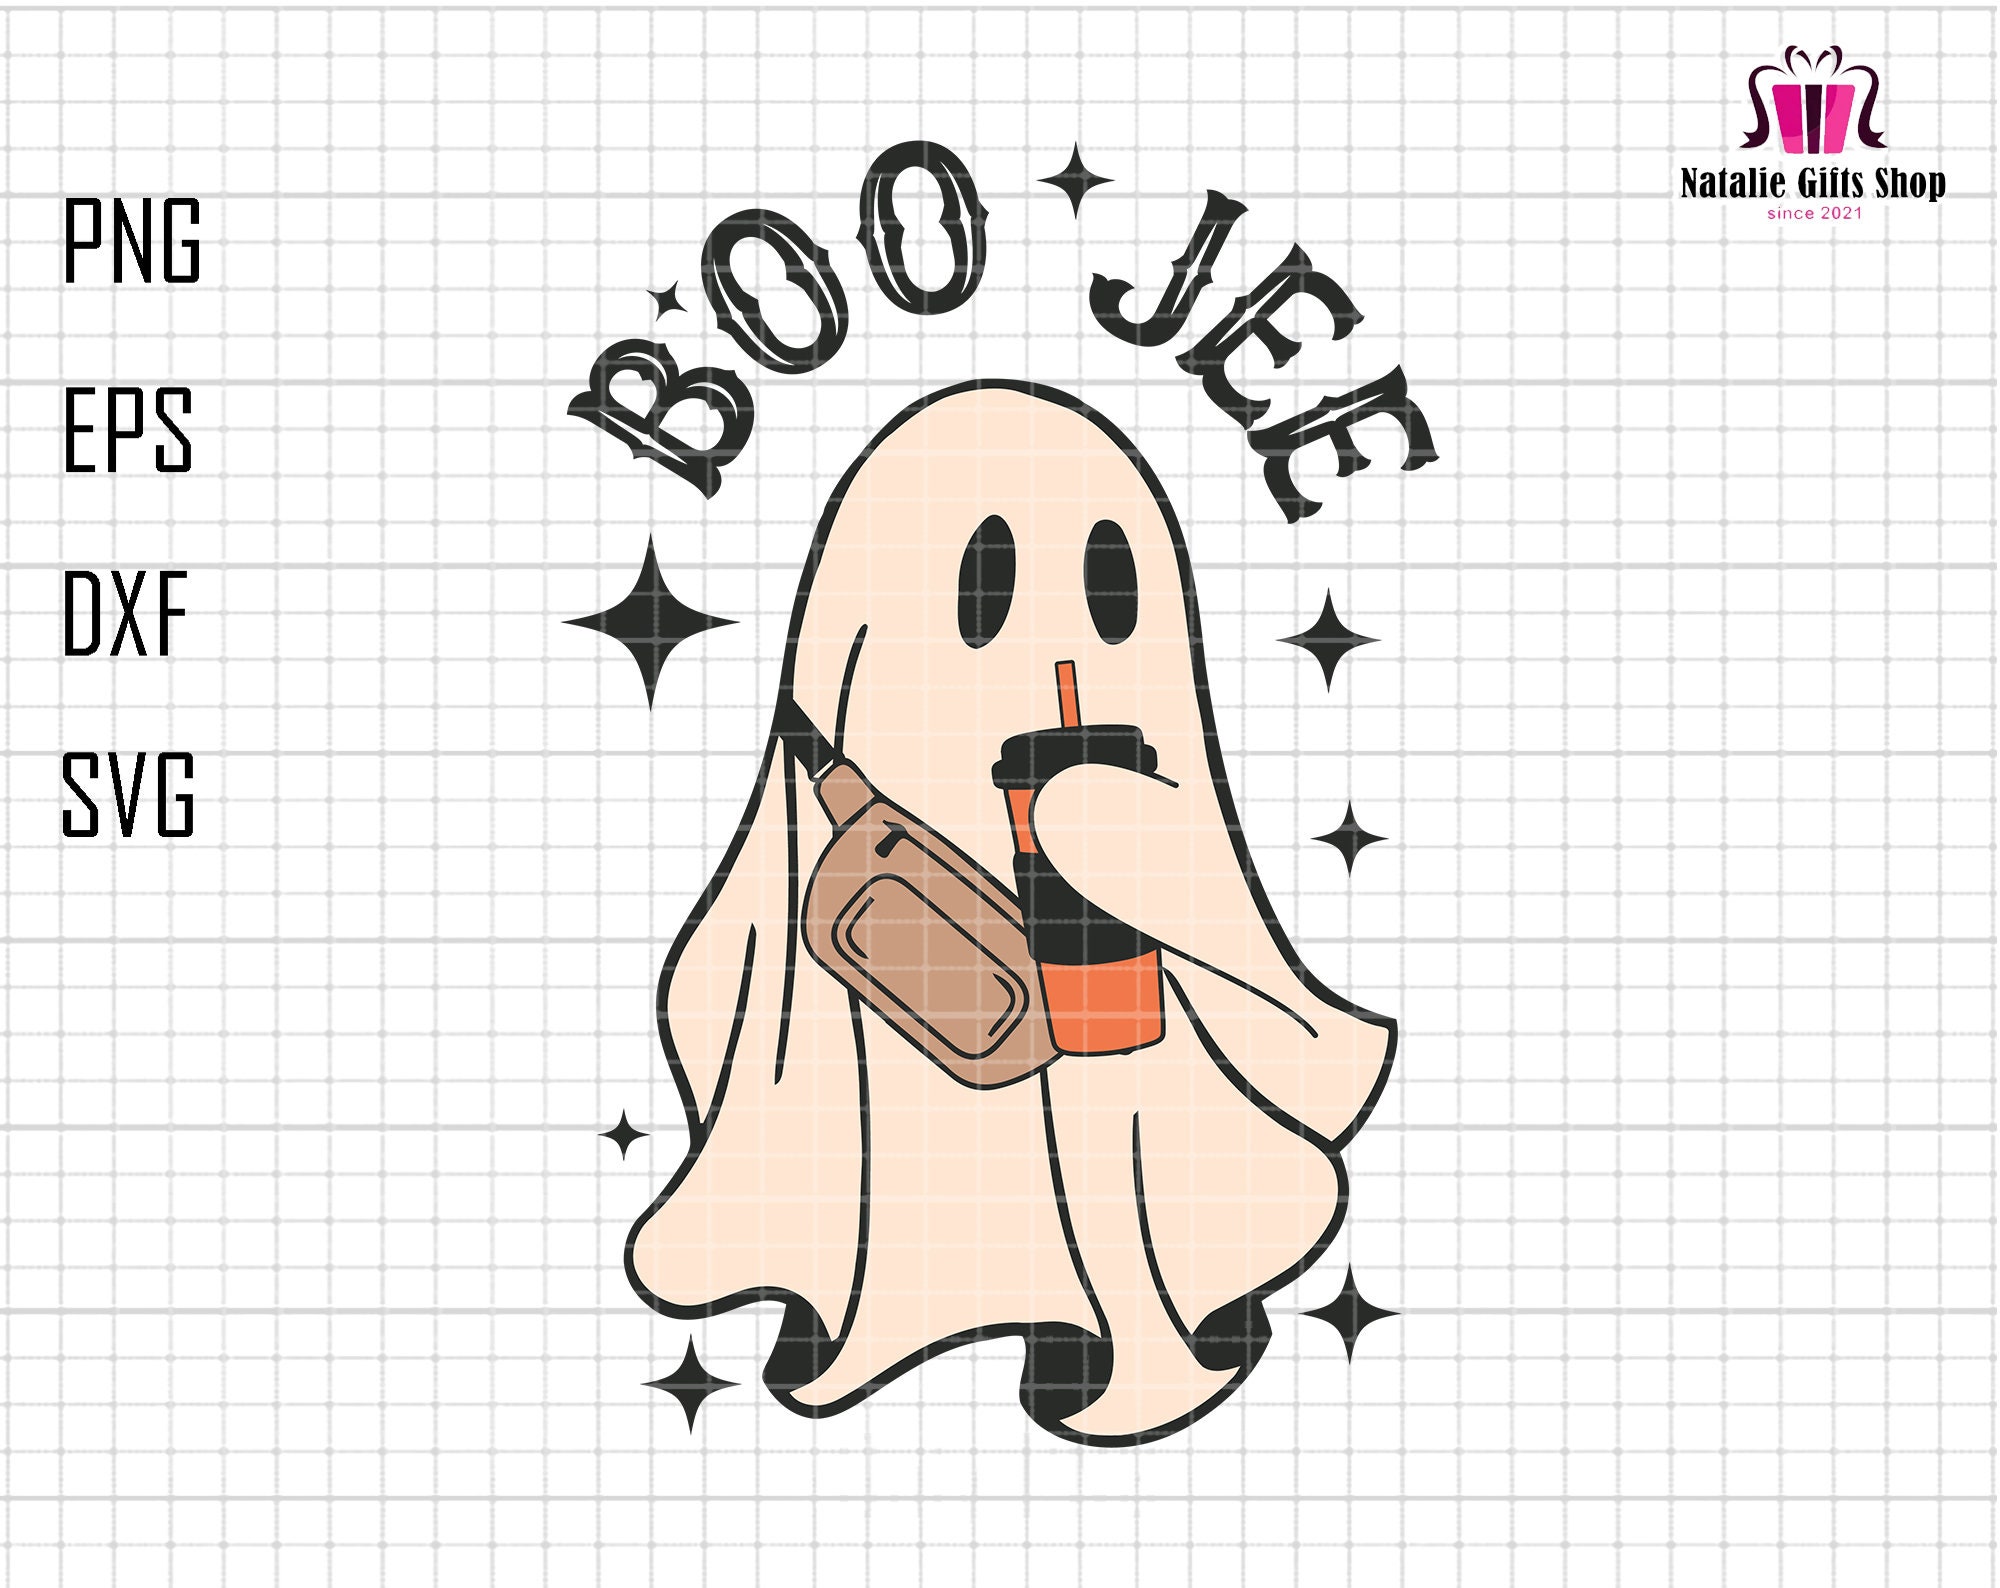  Boo-Jee Spooky Season Retro Ghost Western Halloween Boujee  Sweatshirt : Clothing, Shoes & Jewelry